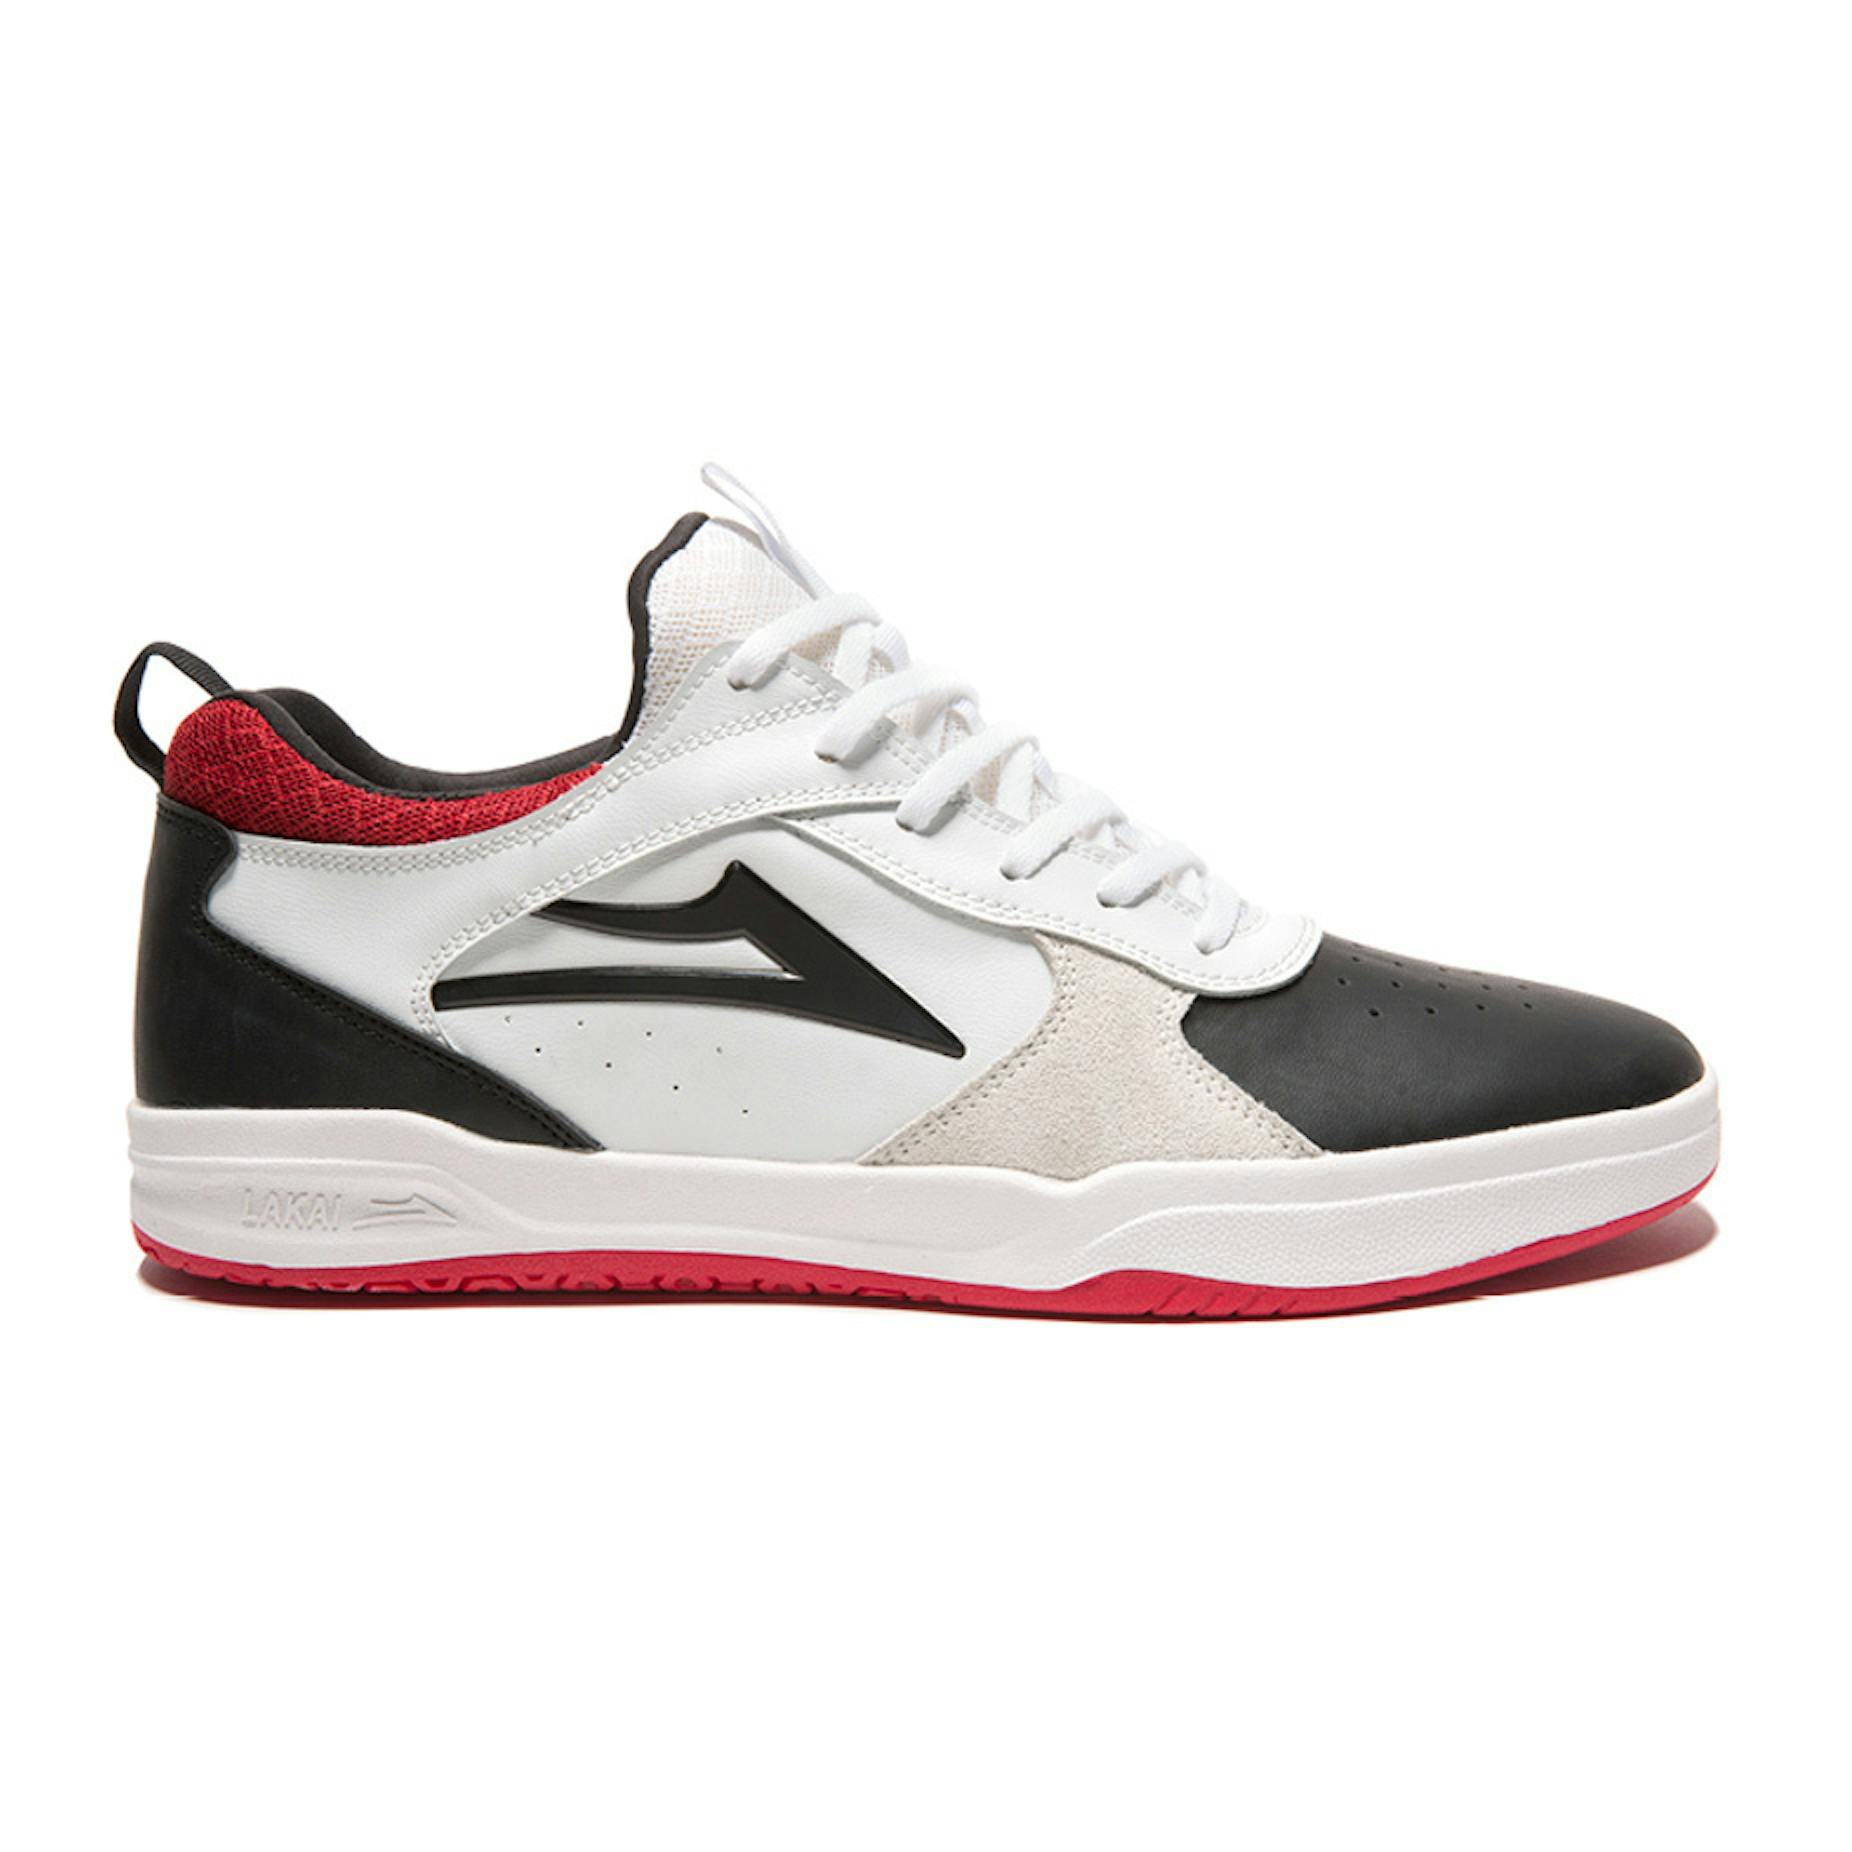 Lakai Proto Tony Hawk Skate Shoe - White / Black Suede | BOARDWORLD Store